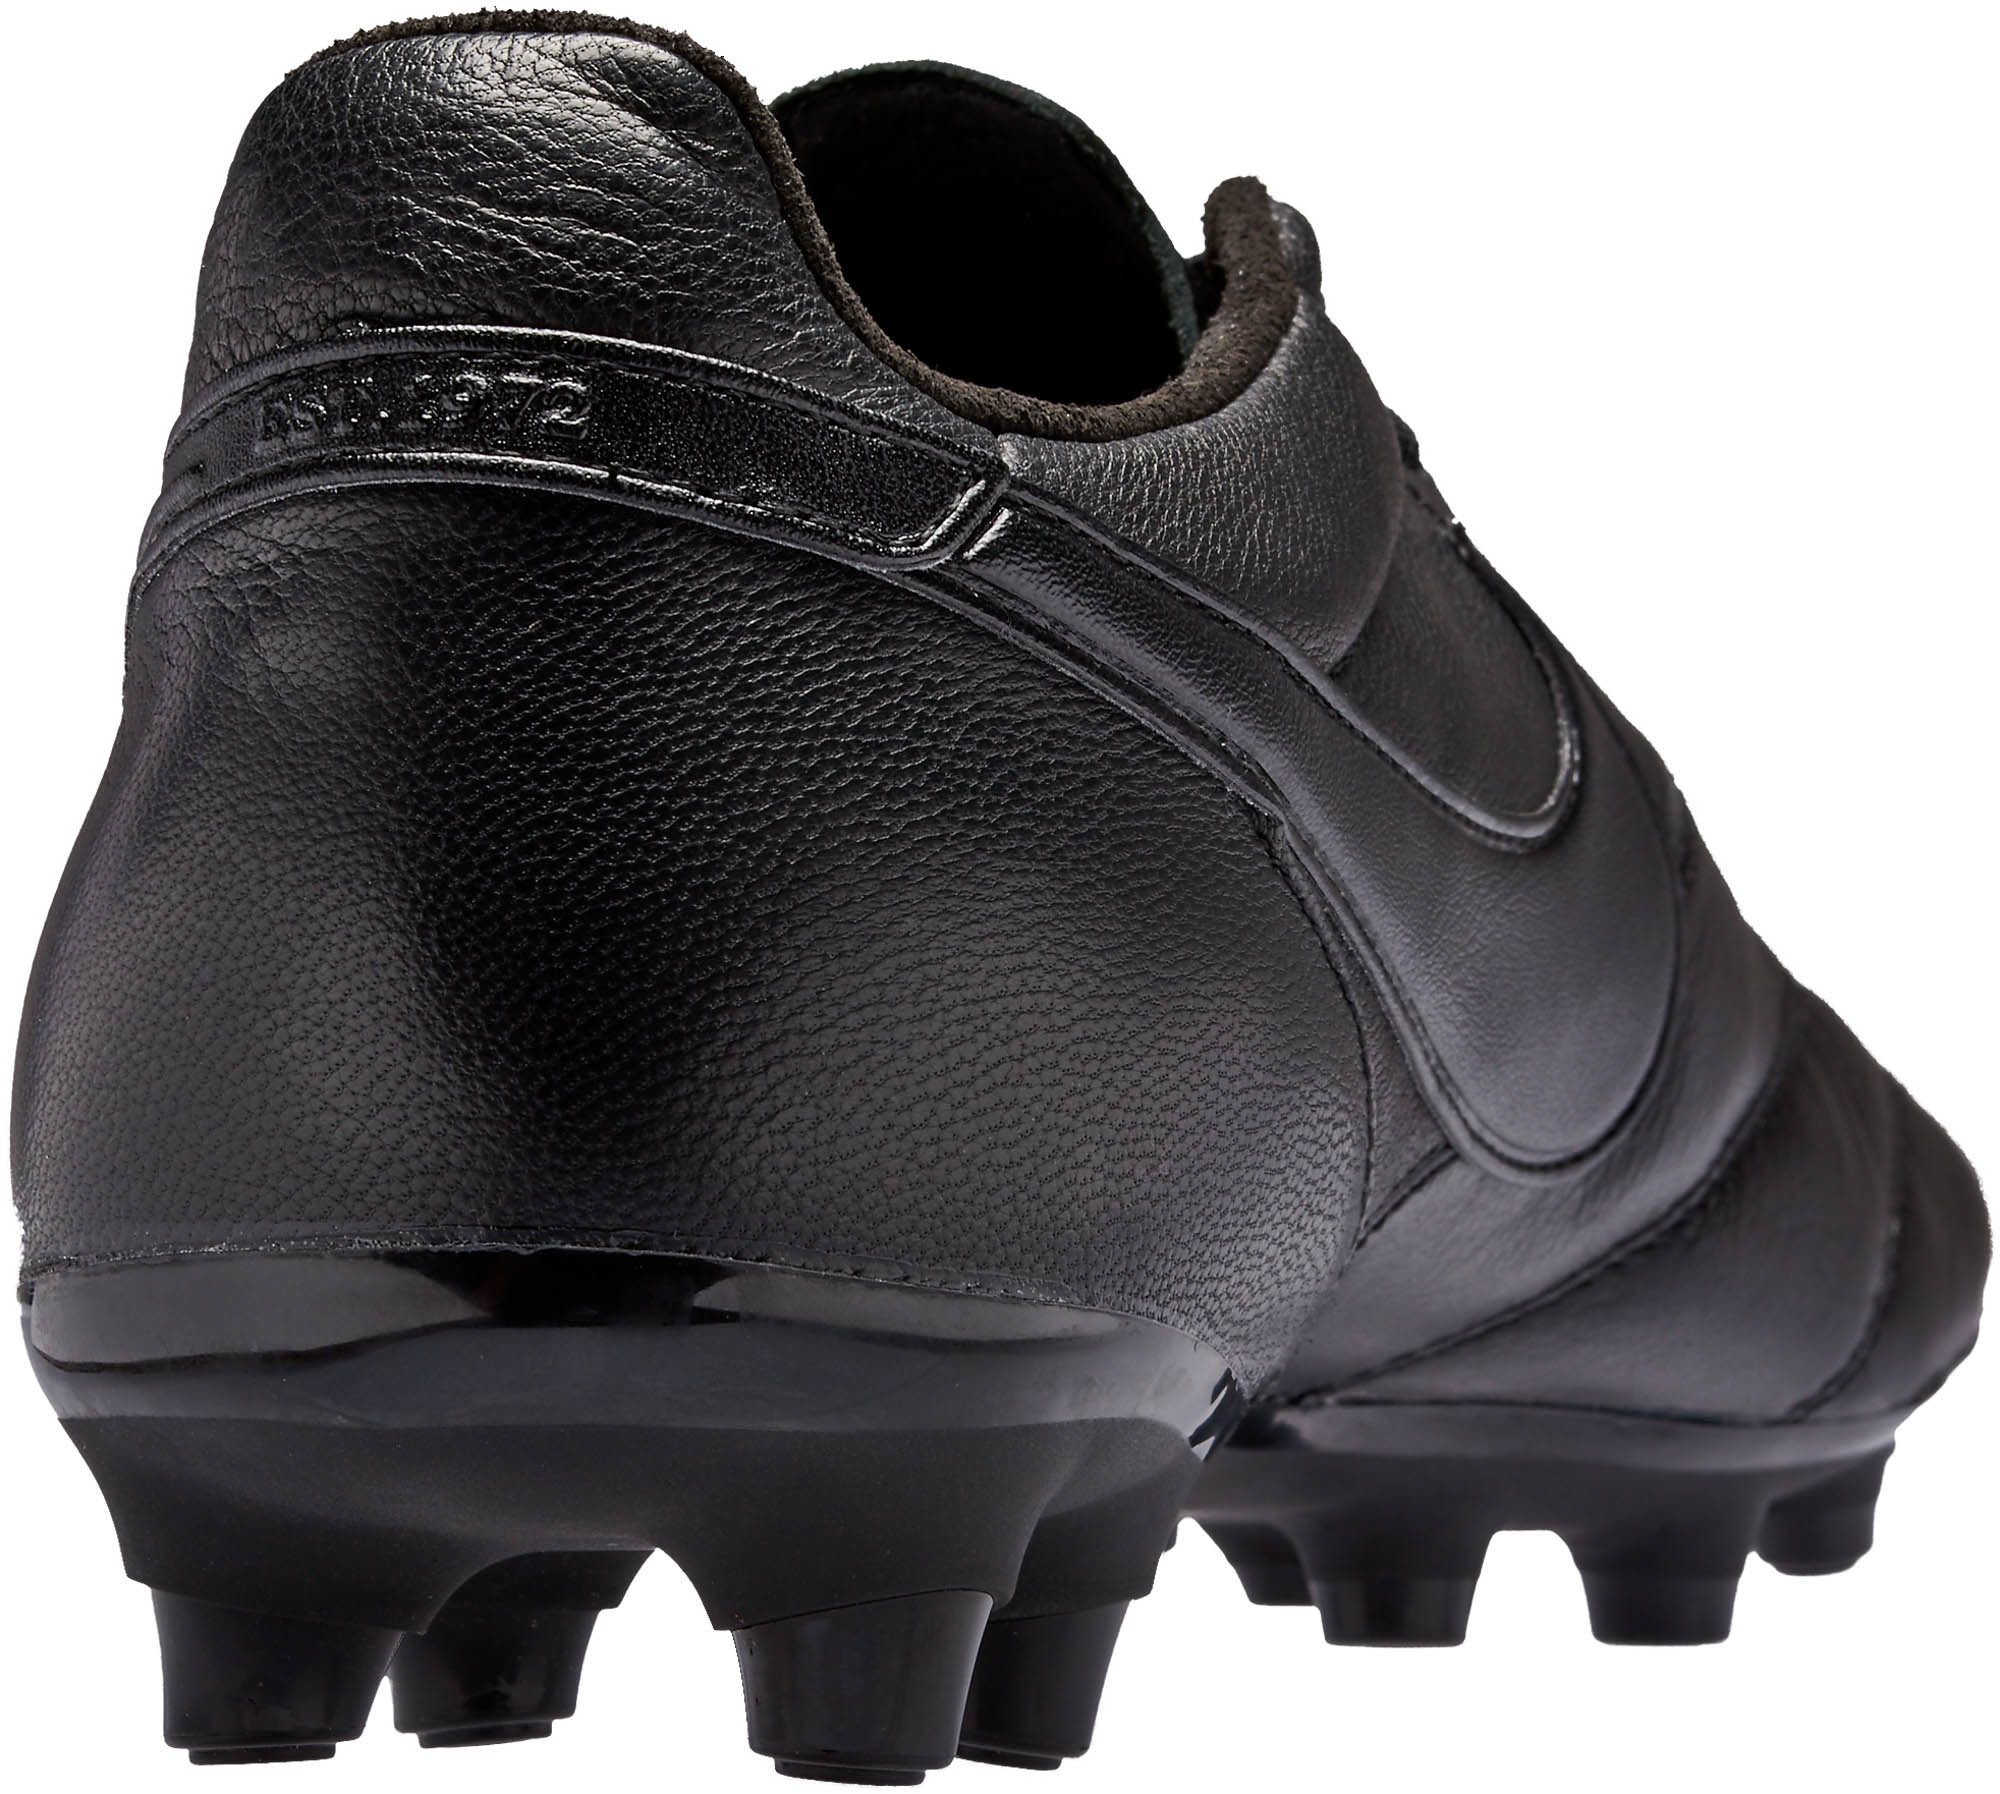 The Nike Premier FG - Triple Black Nike Soccer Cleats